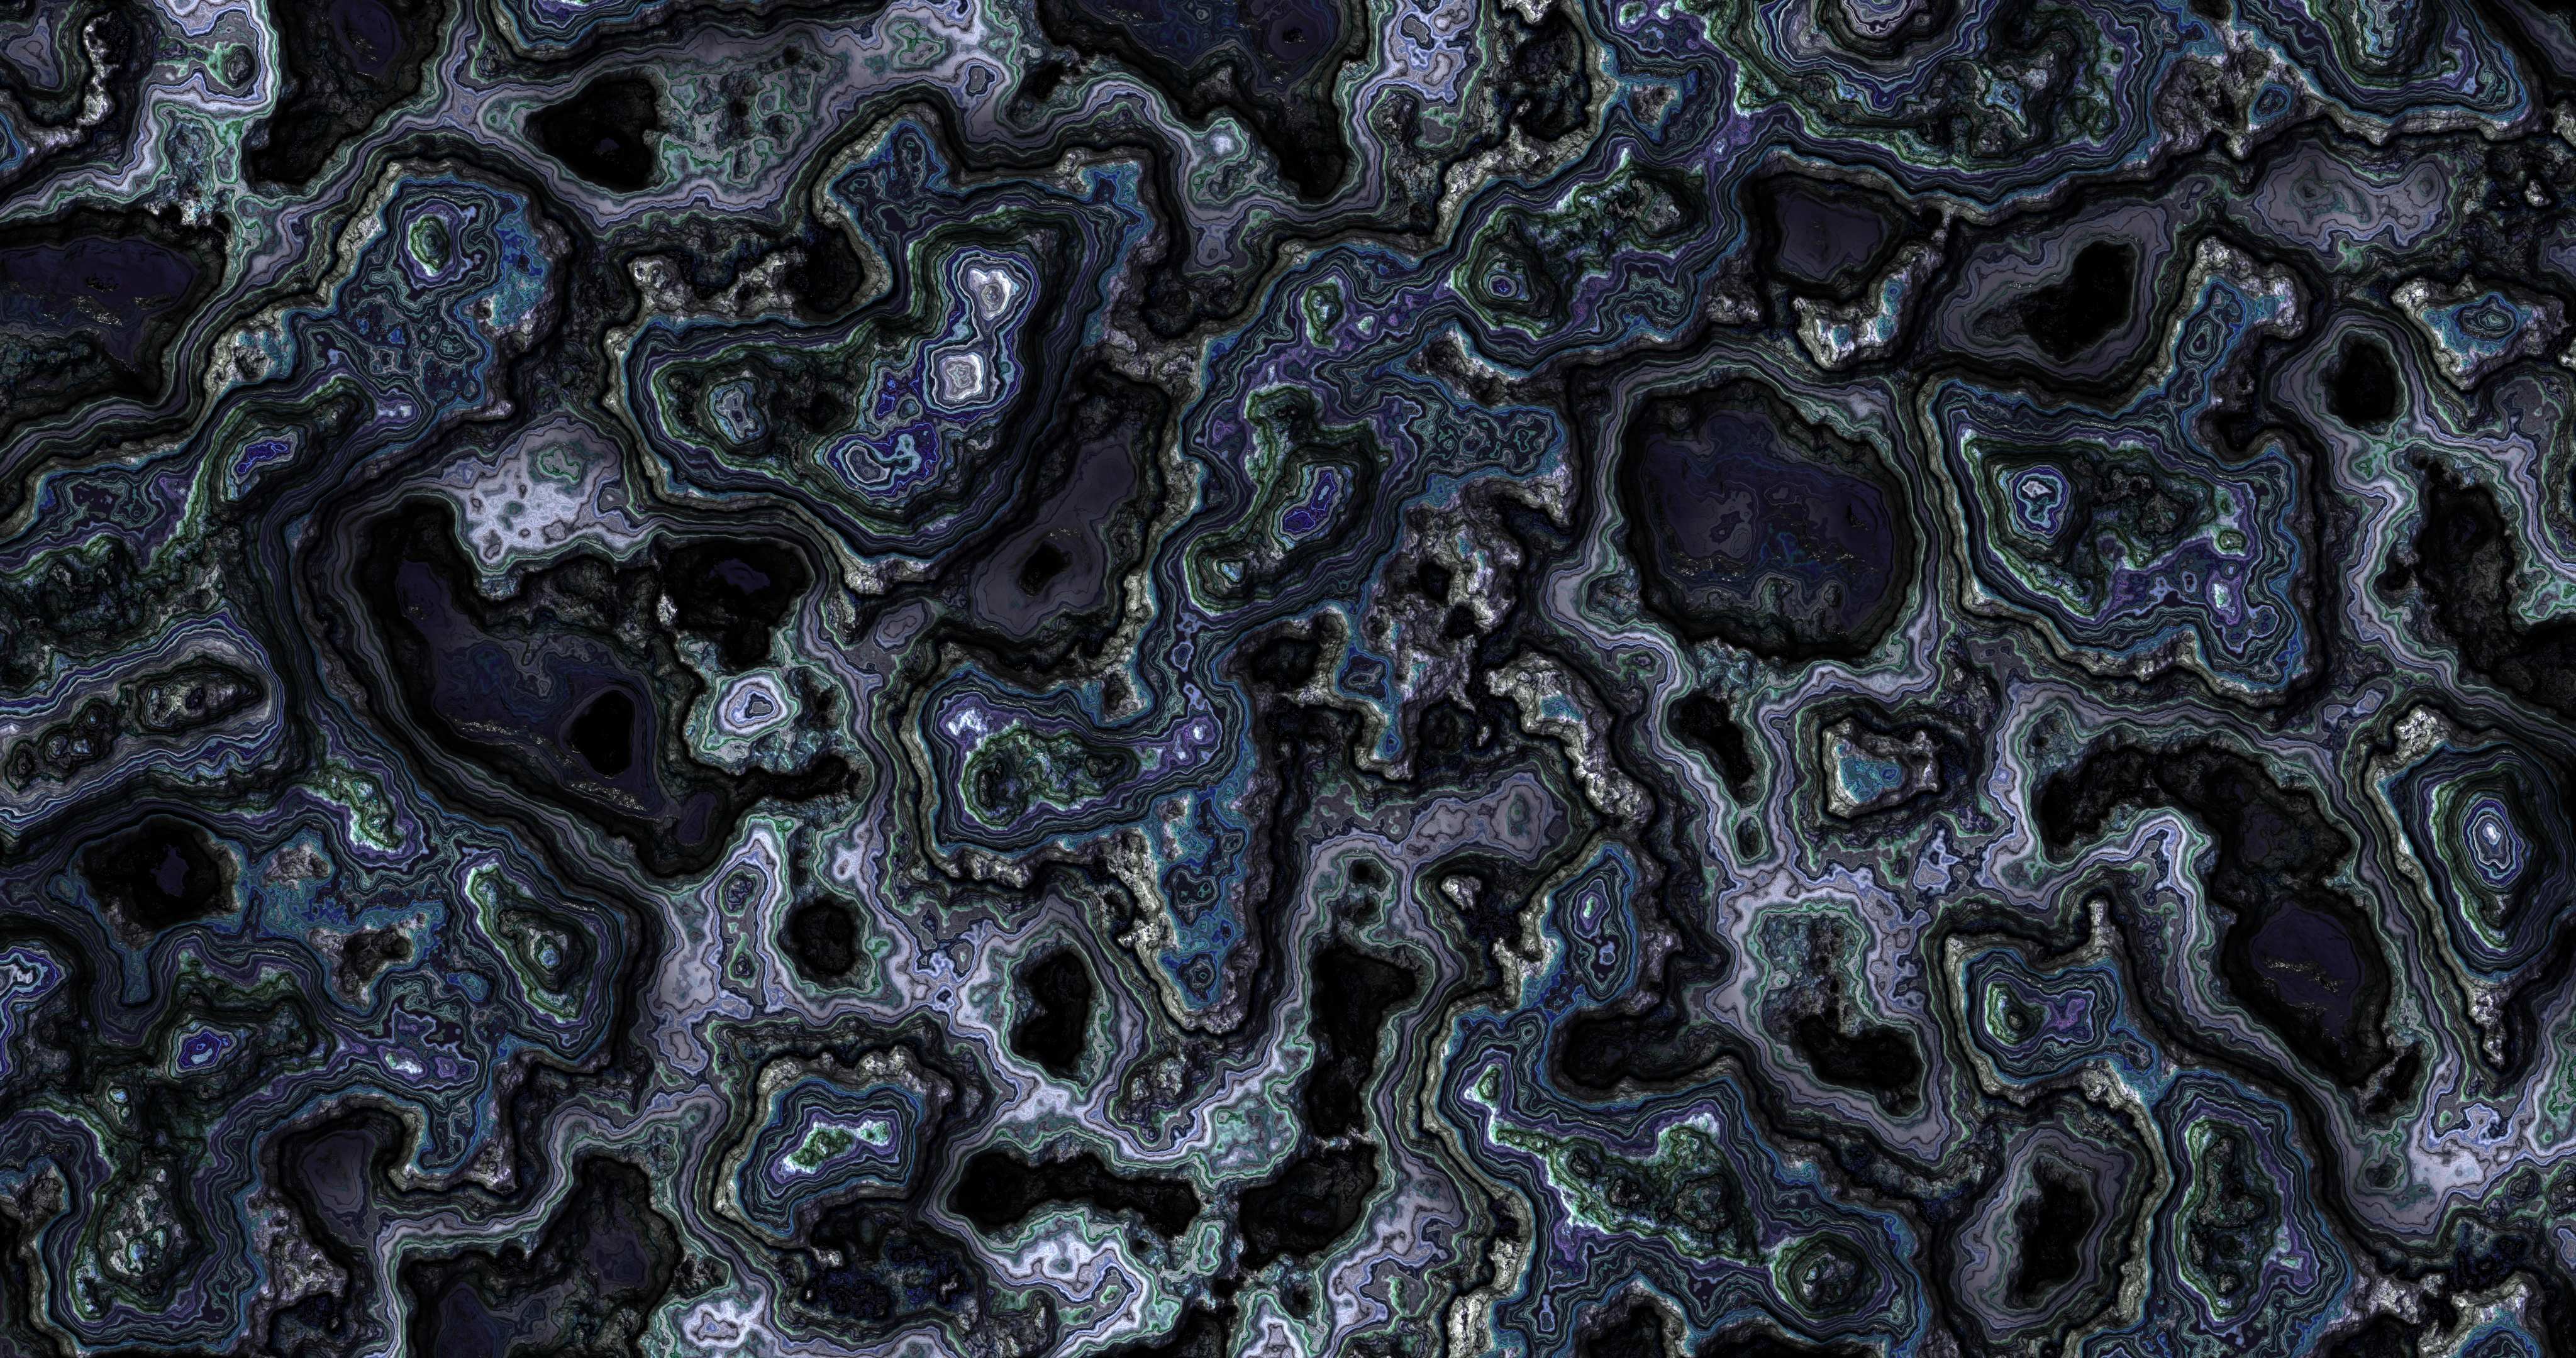 General 4096x2160 3D fractal digital art abstract artwork